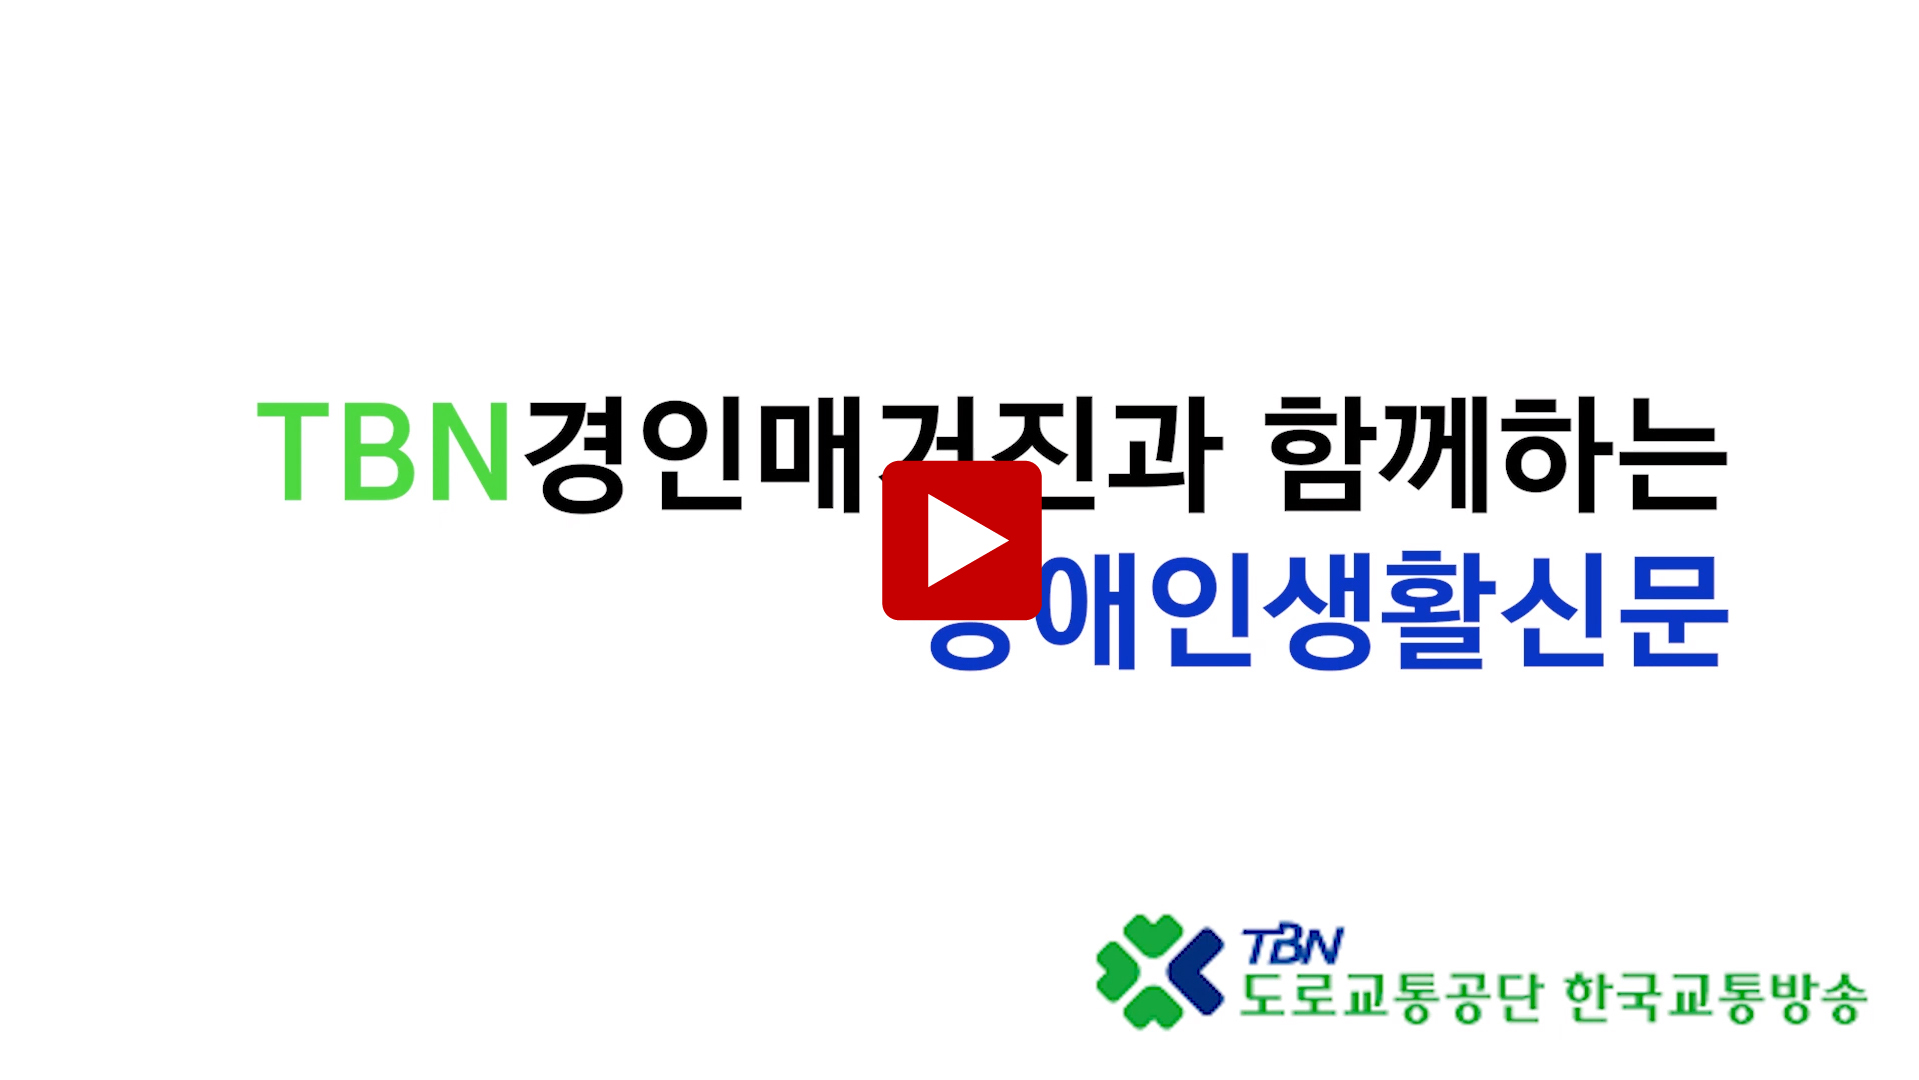 TBN경인매거진과 함께하는 장애인생활신문 -2022년 3월 9일 방송